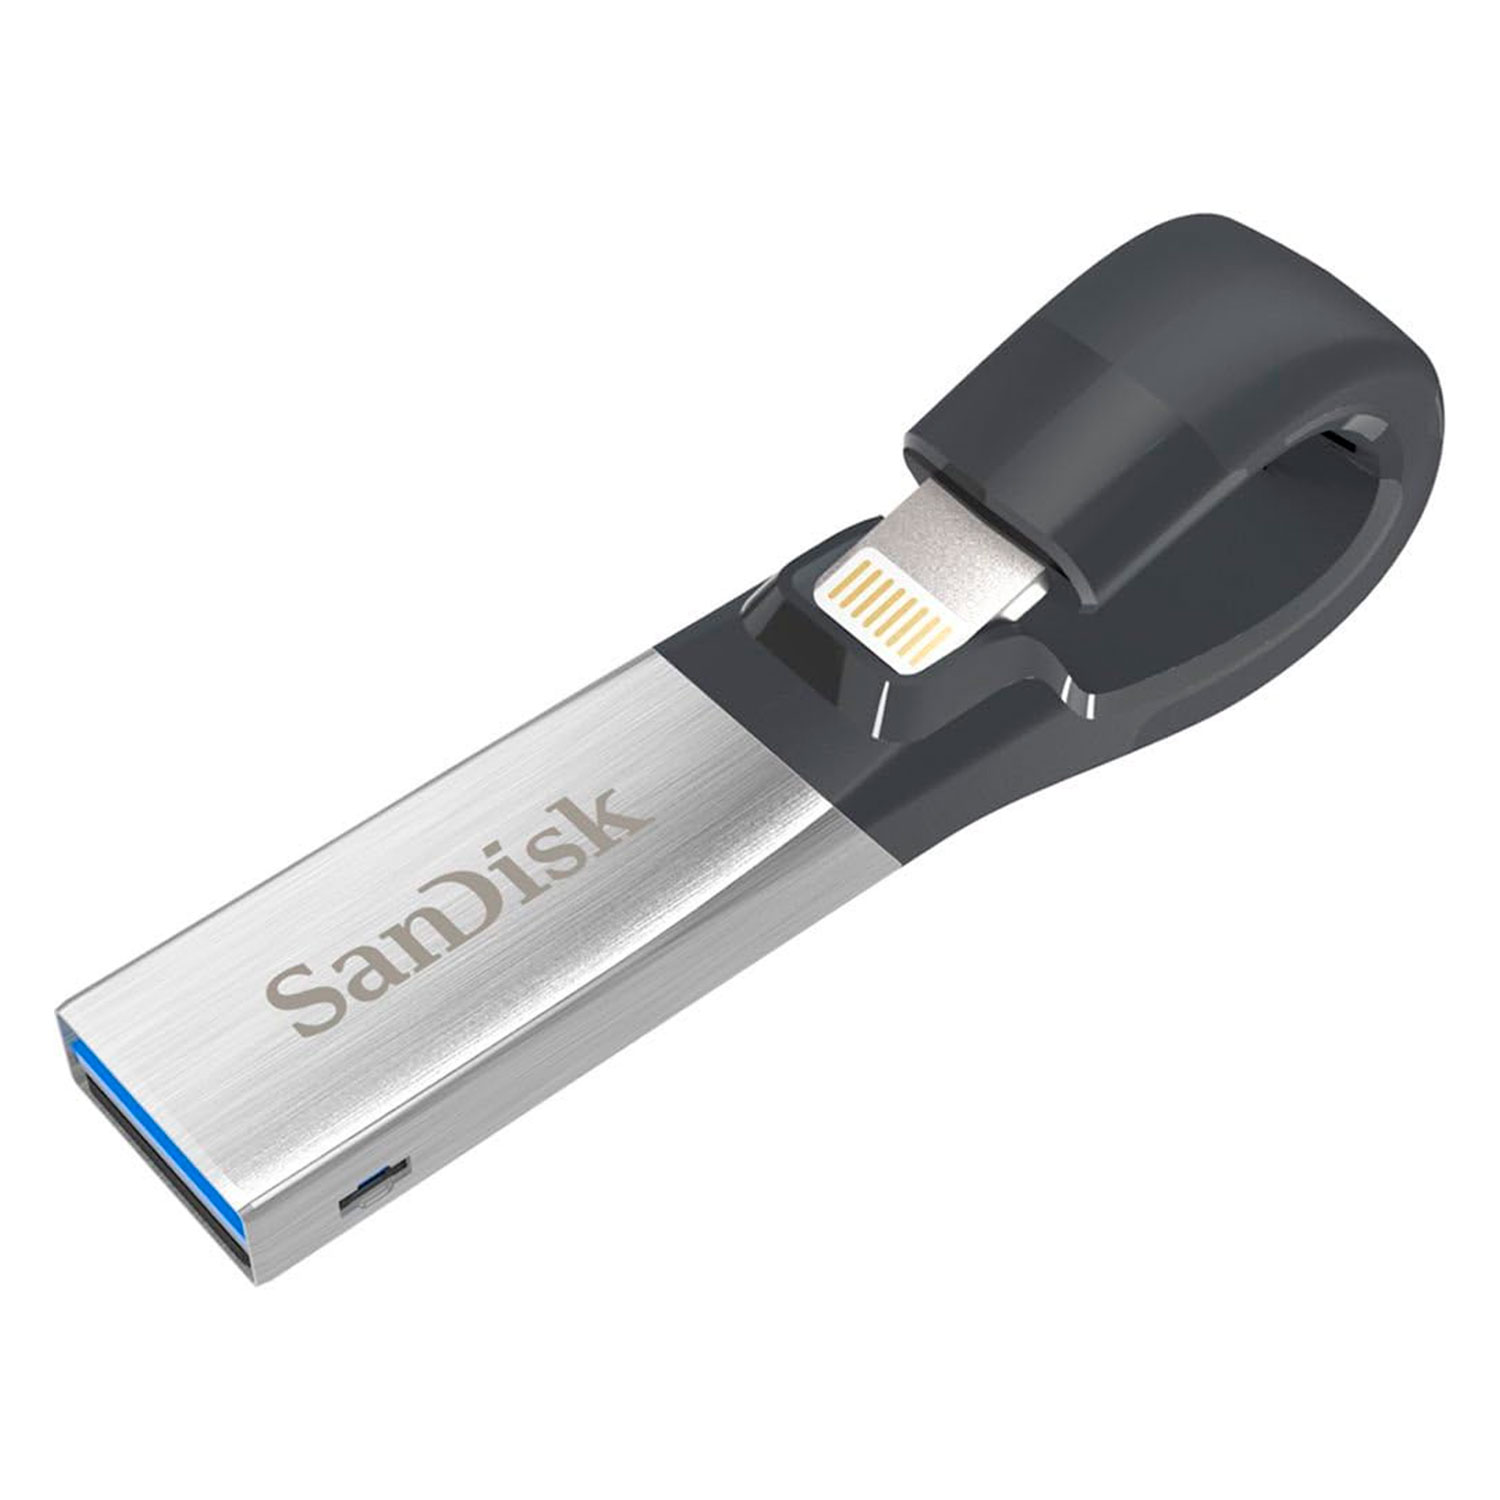 Pendrive Sandisk Ixpand para iPhone USB 3.0 - SDIX30C-016G-GN6NN